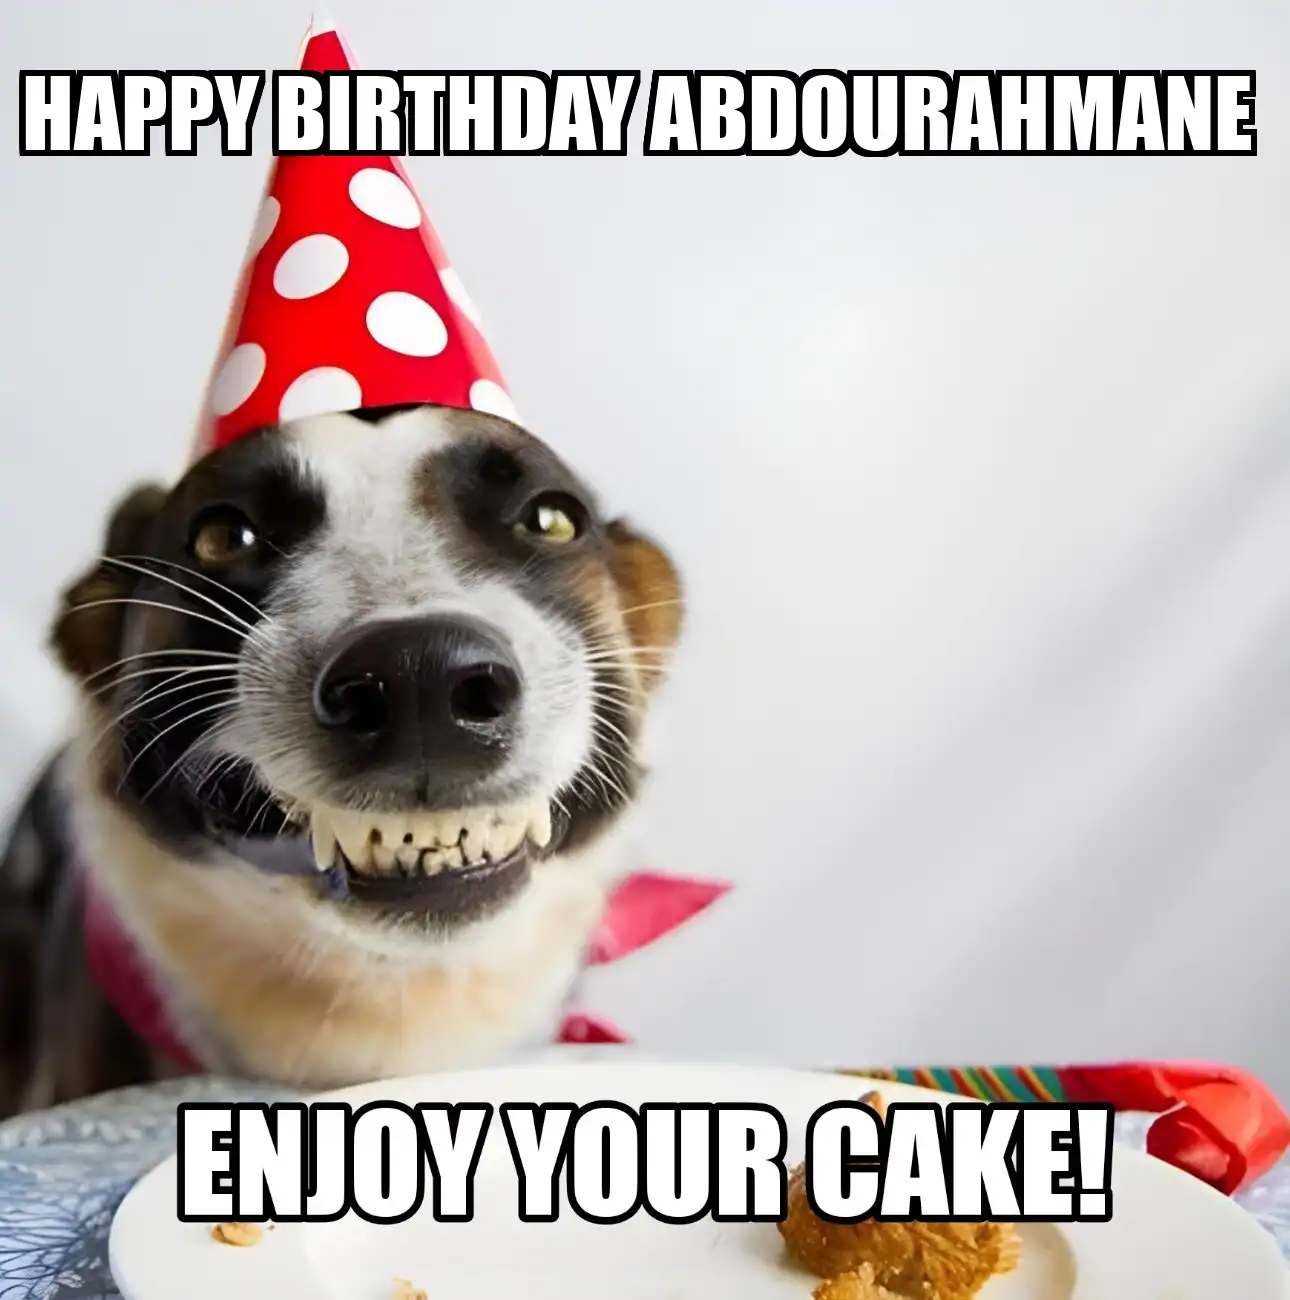 Happy Birthday Abdourahmane Enjoy Your Cake Dog Meme